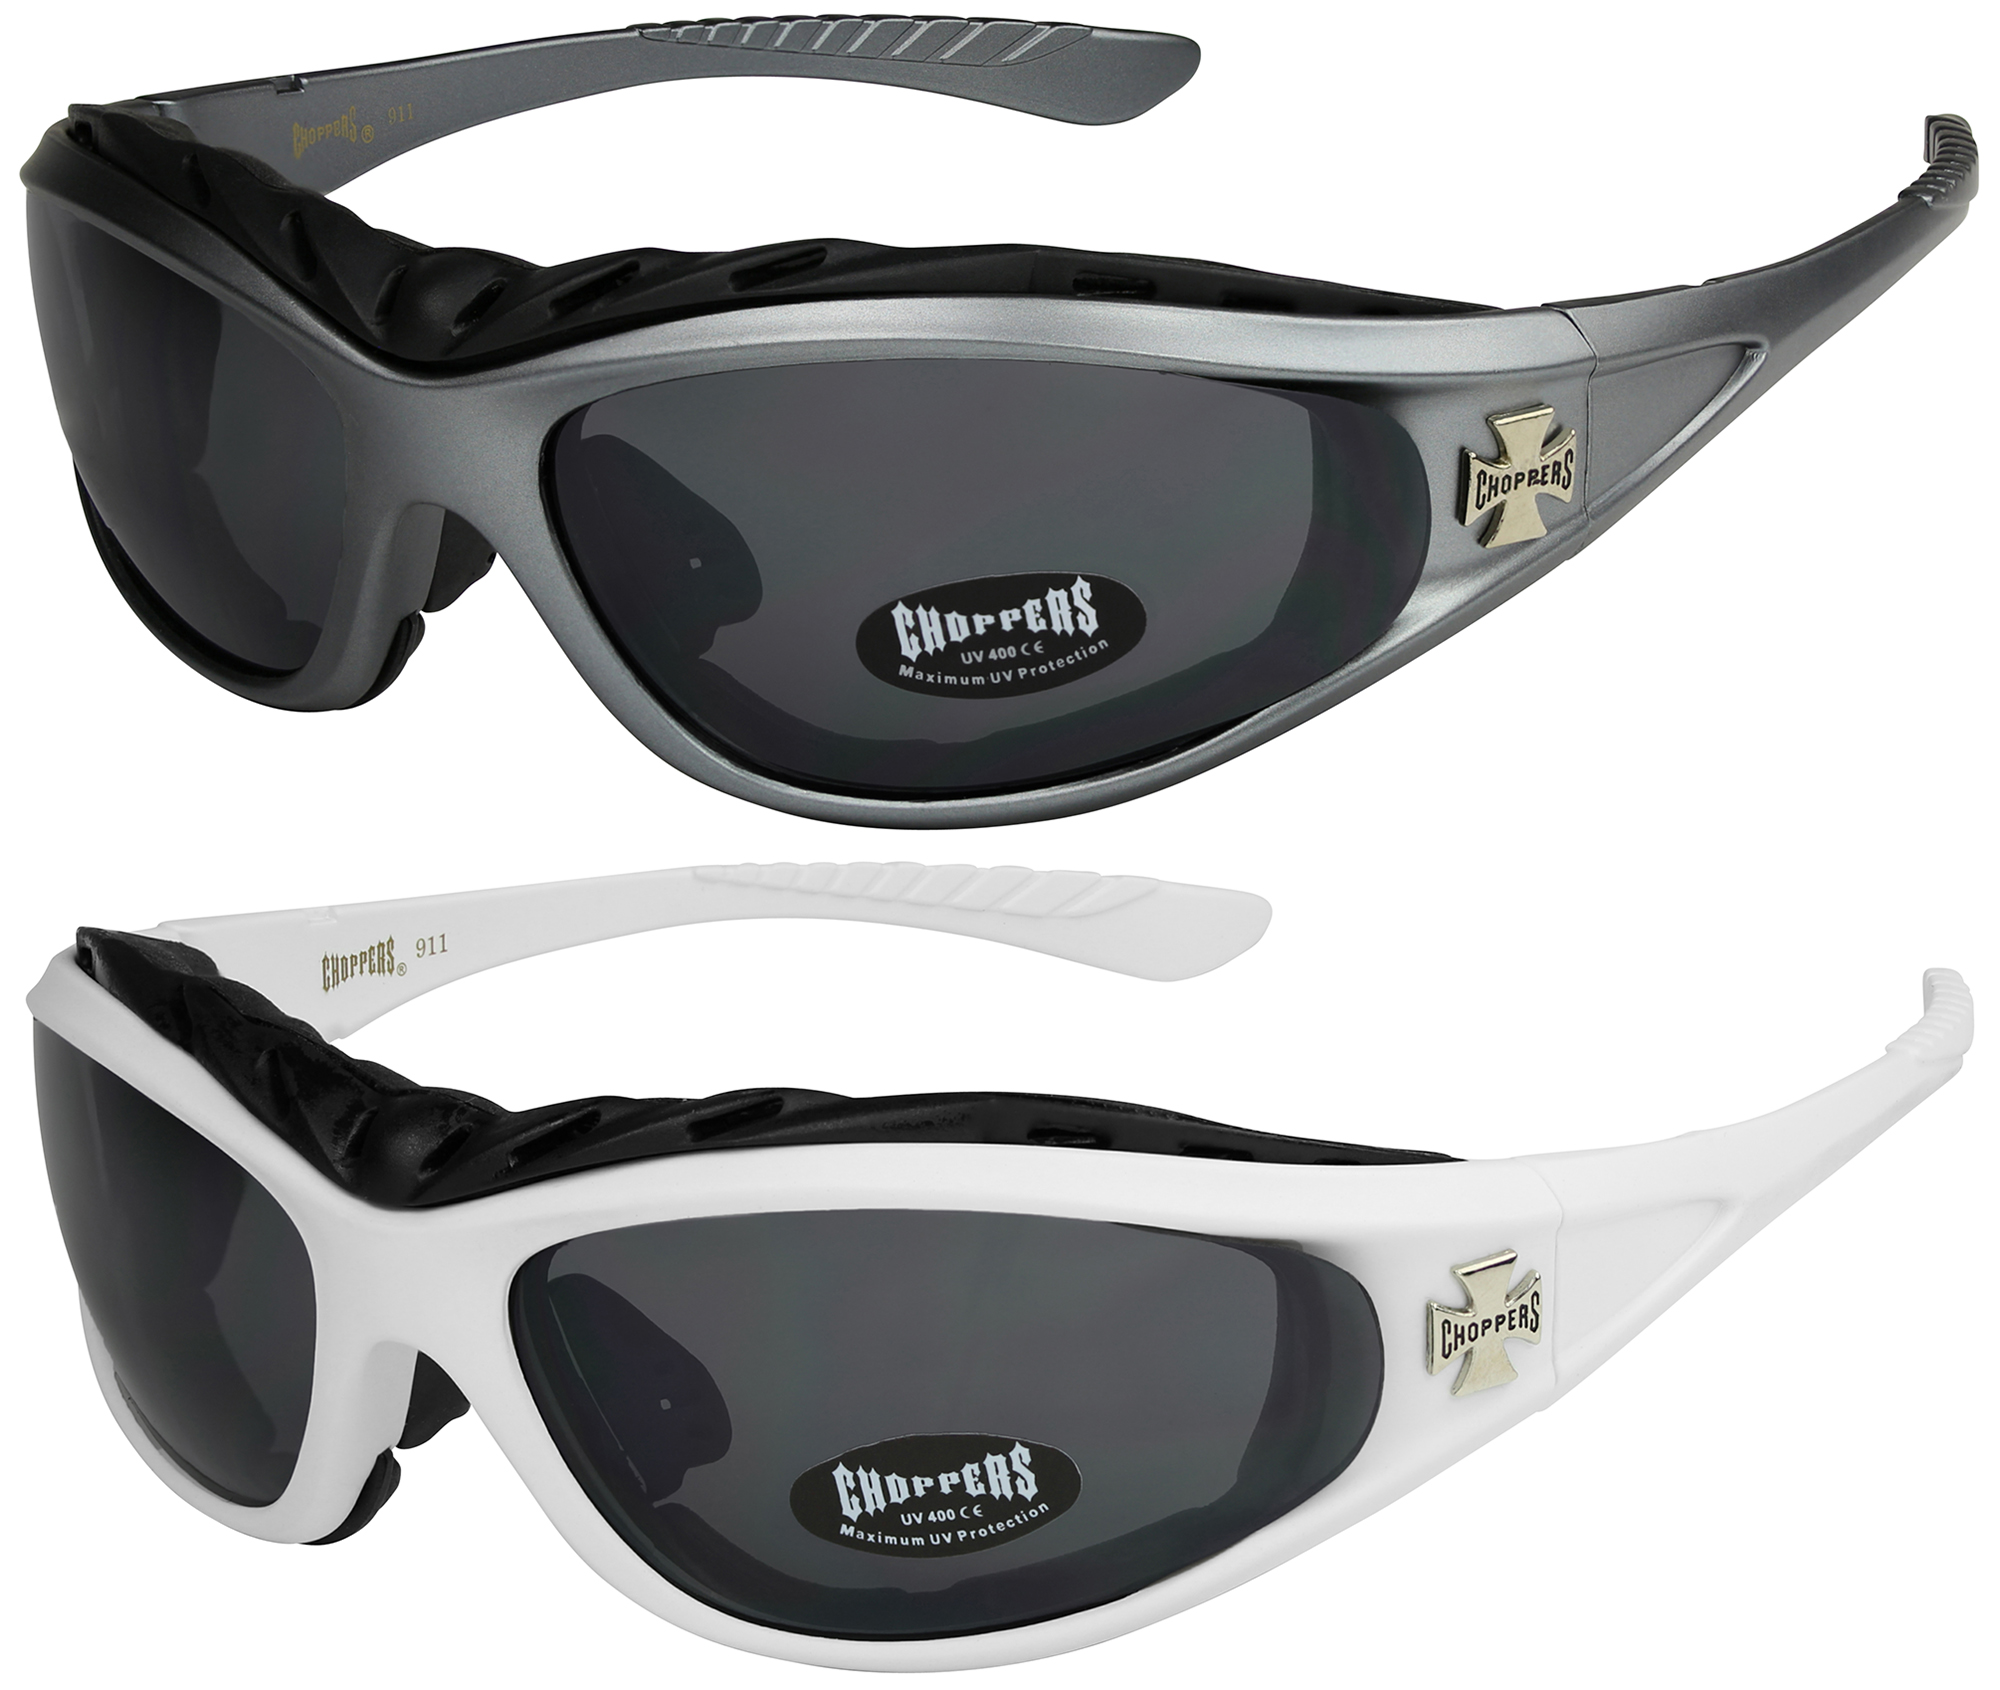 2er Pack Choppers 911 Locs Fahrradbrille Sonnenbrille Herren Damen schwarz grau 